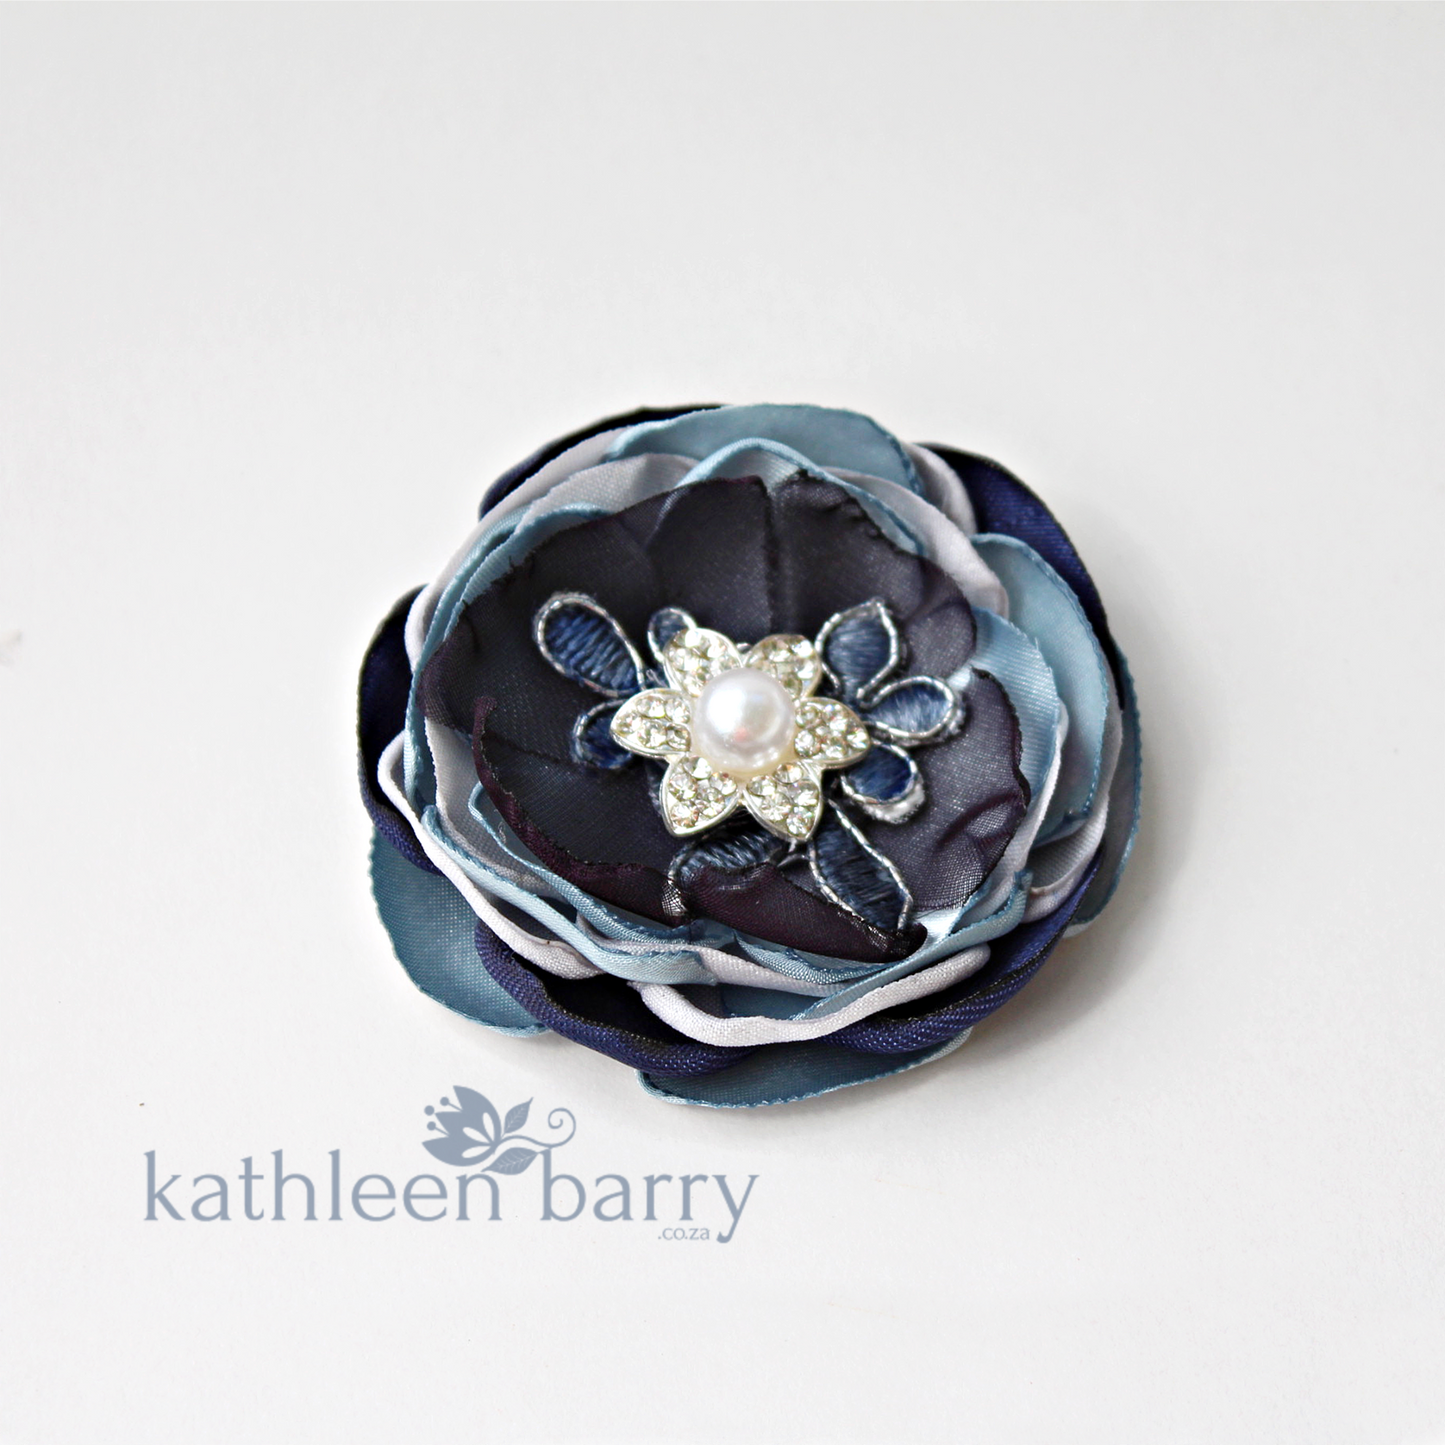 Navy blue hair flower or brooch - Bride, flower girl, bridesmaid, mother of the bride or groom gifts